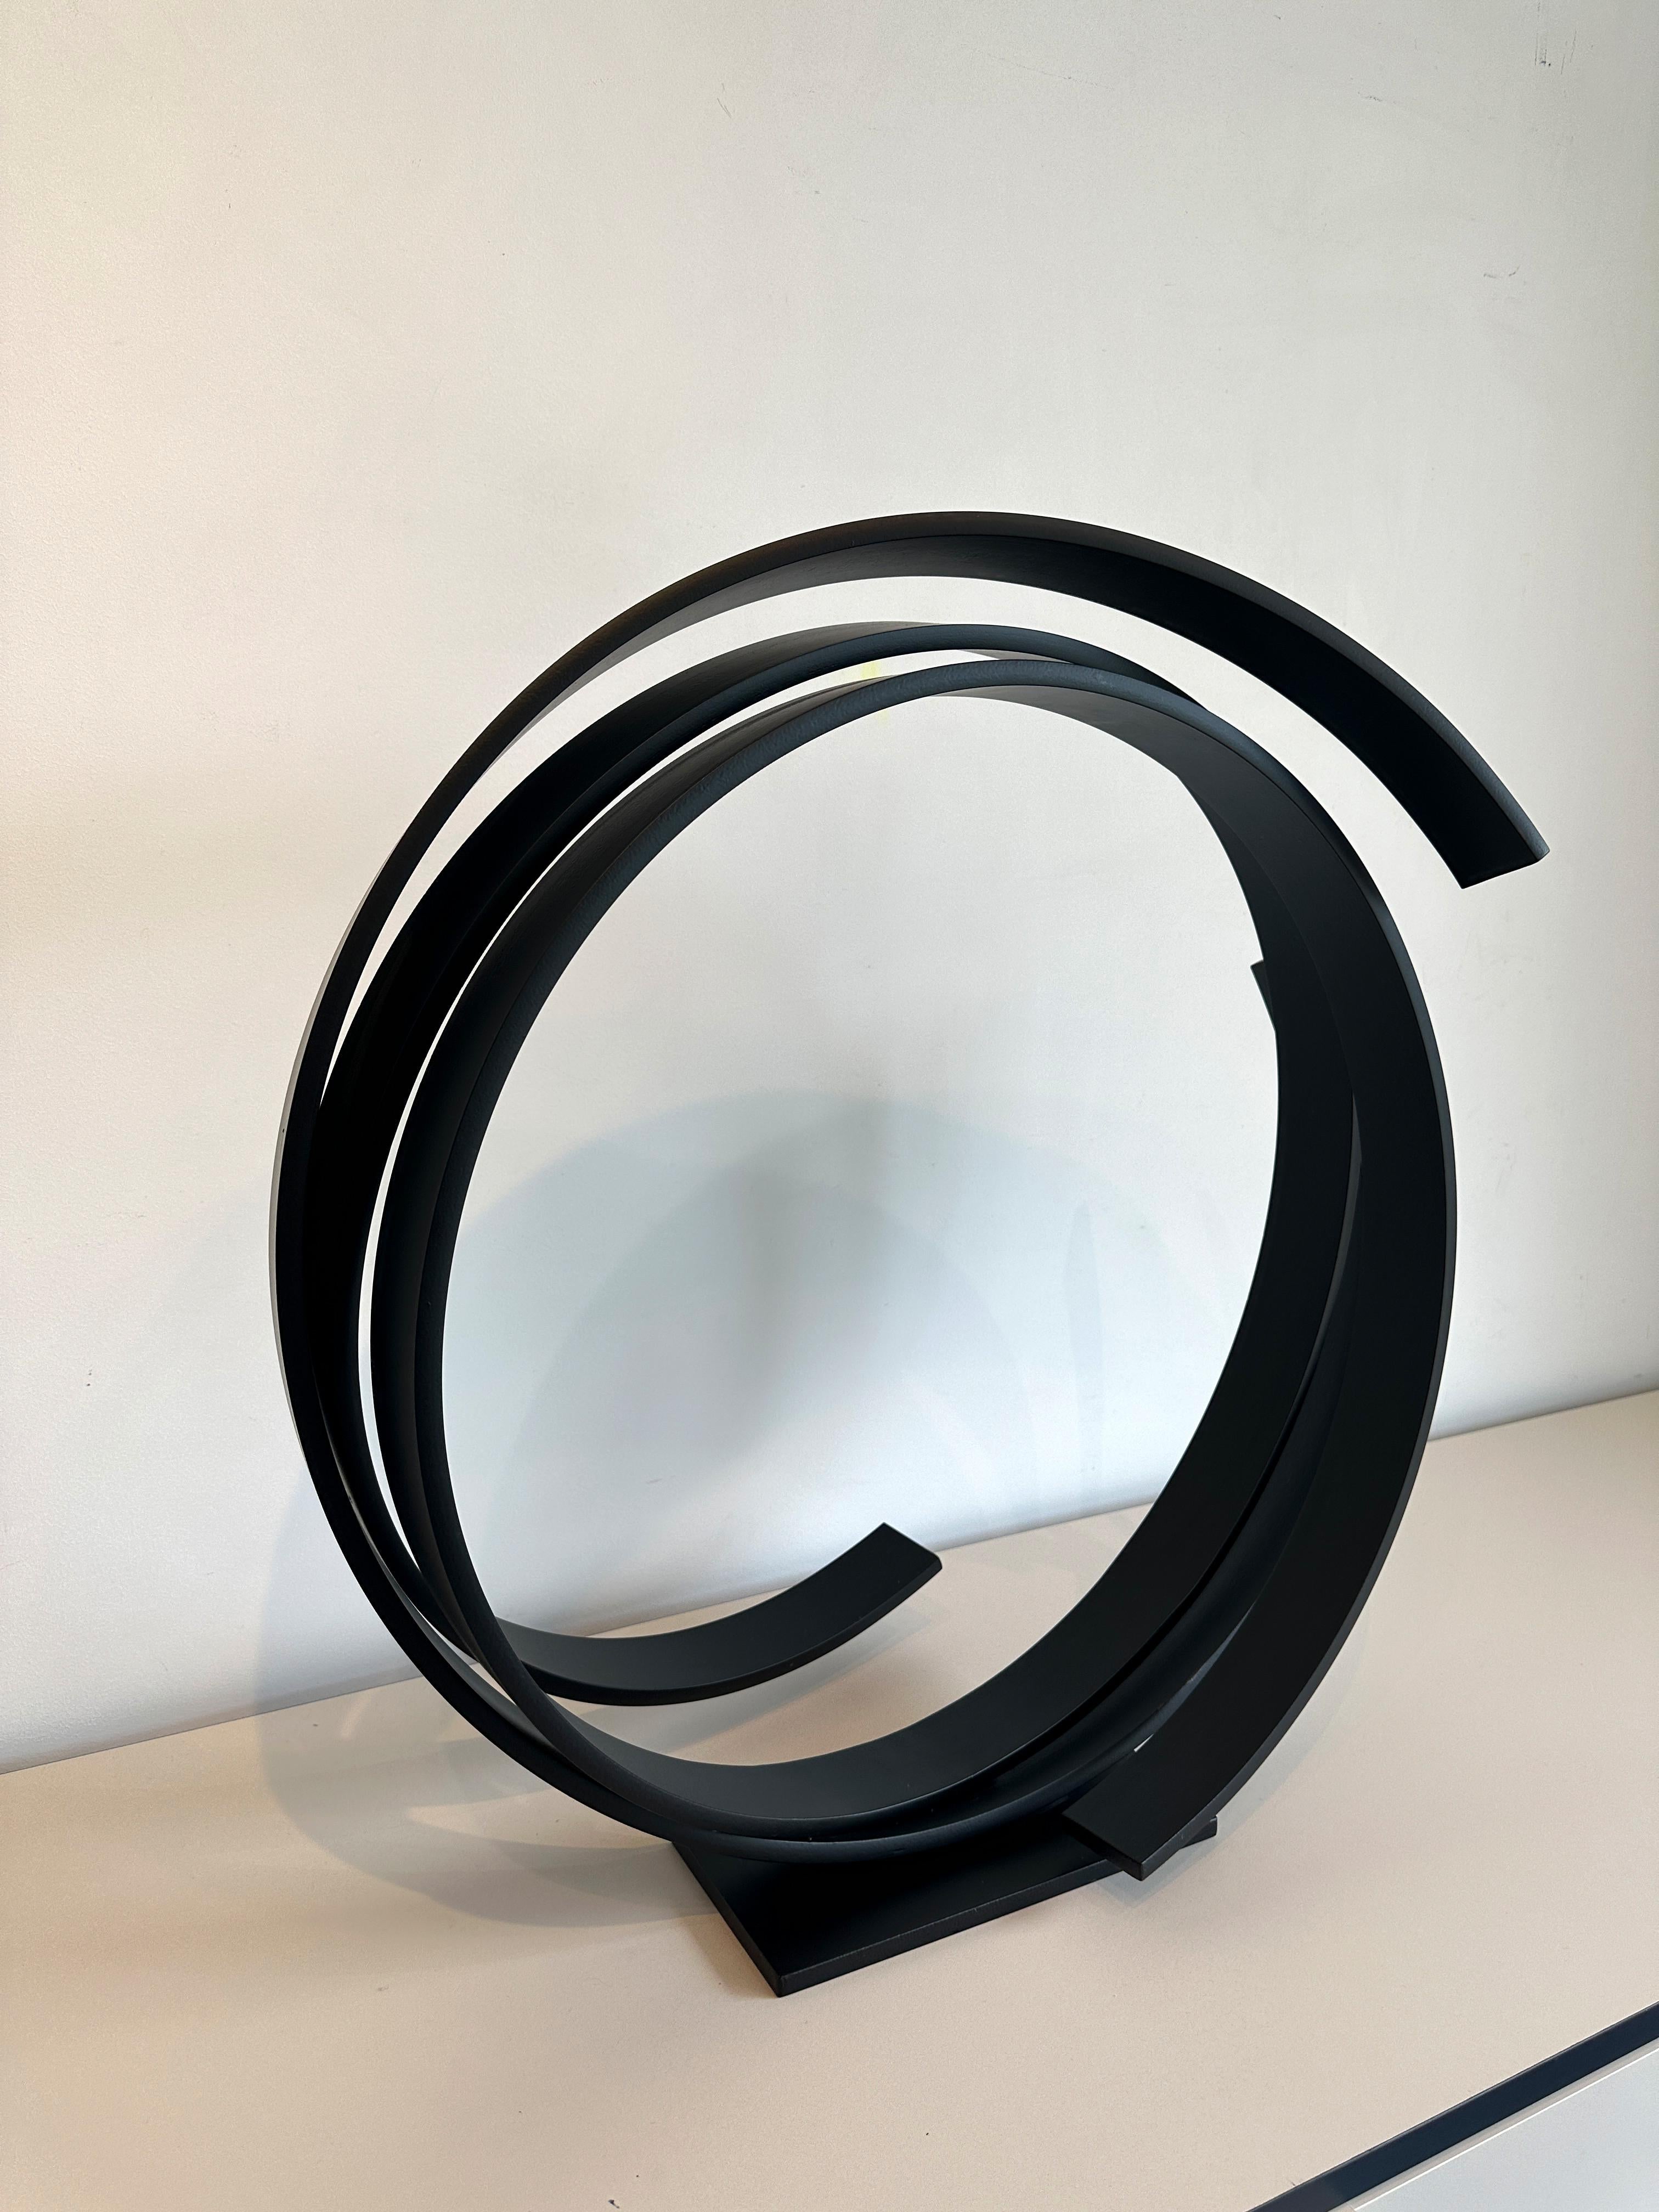 Black Orbit by Kuno Vollet - Large Contemporary Round Orbit sculpture  For Sale 1